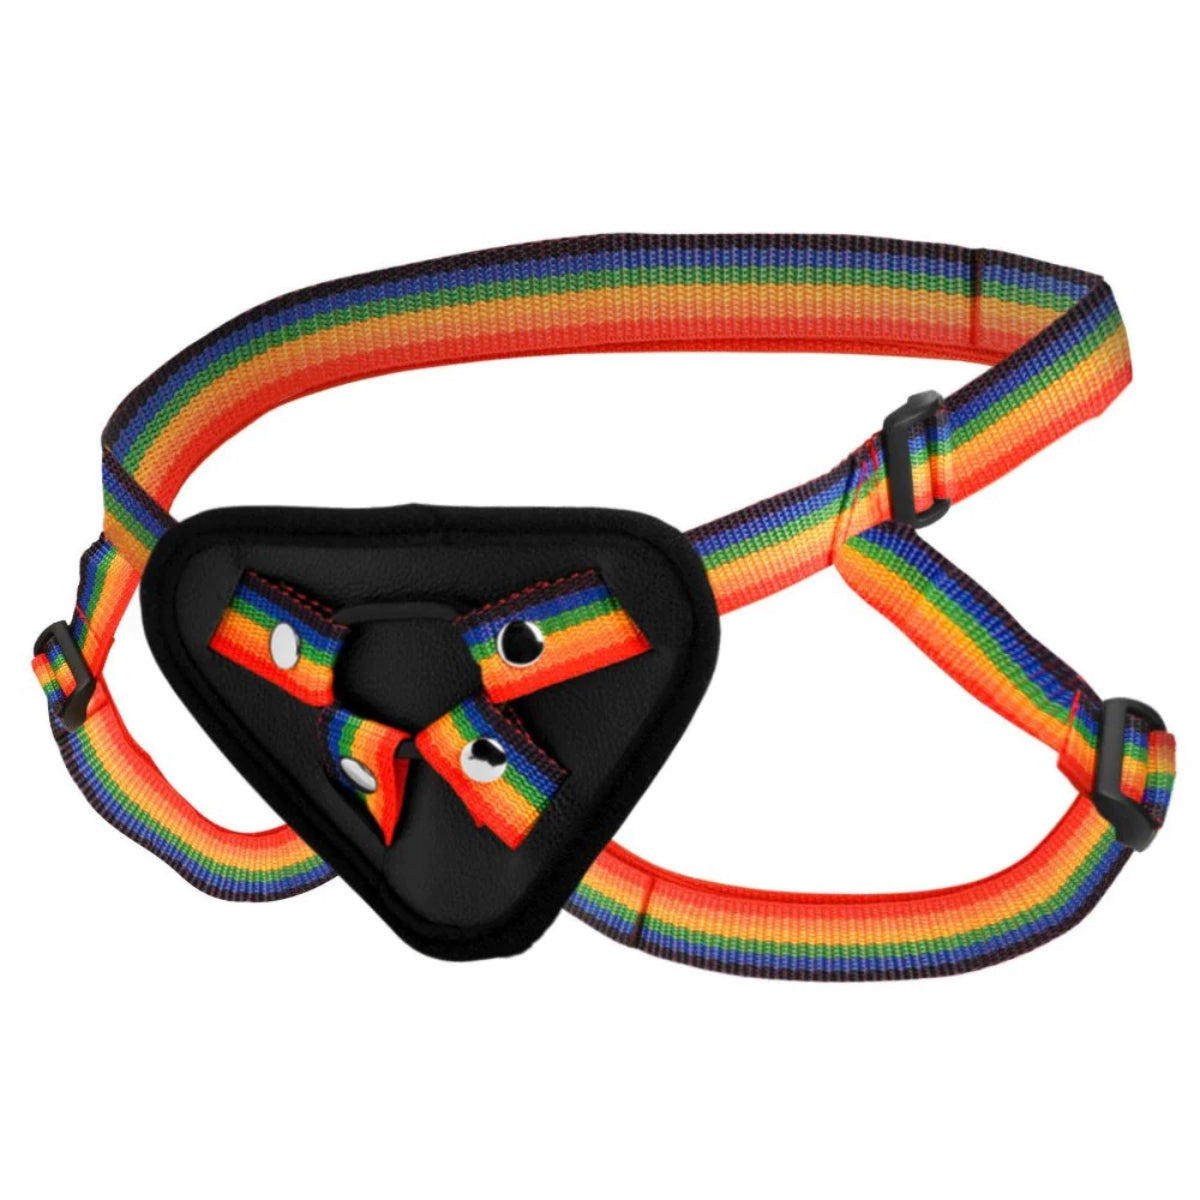 Strap U Ride The Rainbow Universal Rainbow Strap-On Harness